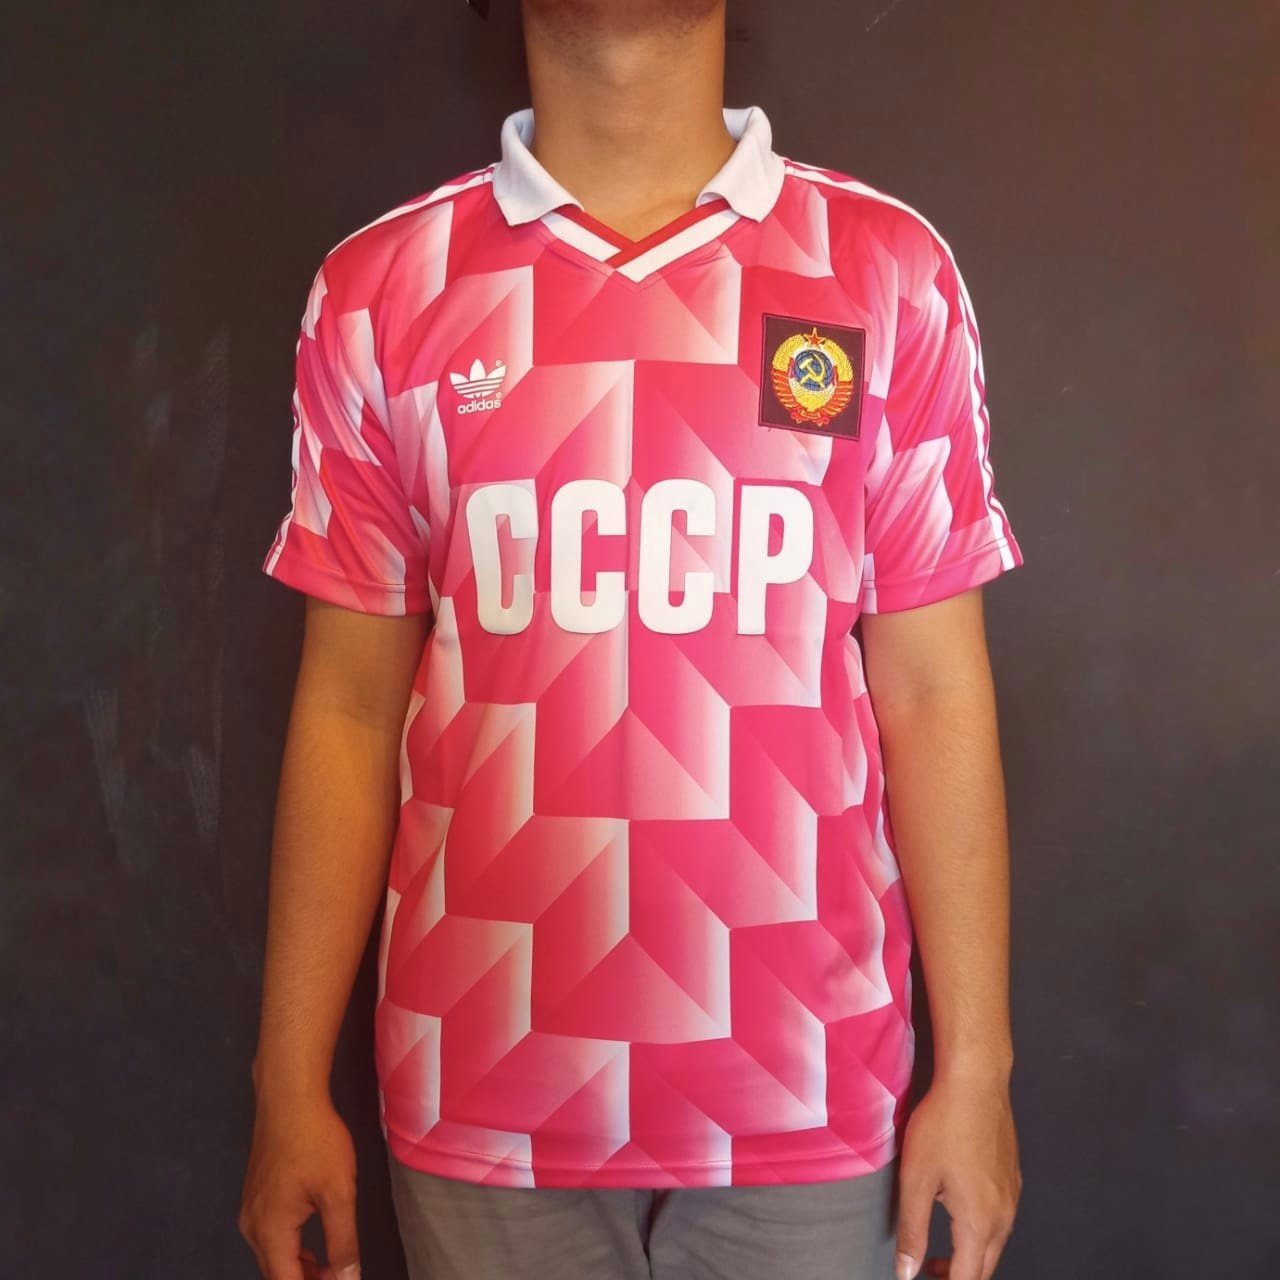 CCCP / USSR Home football shirt 1988 - 1990.